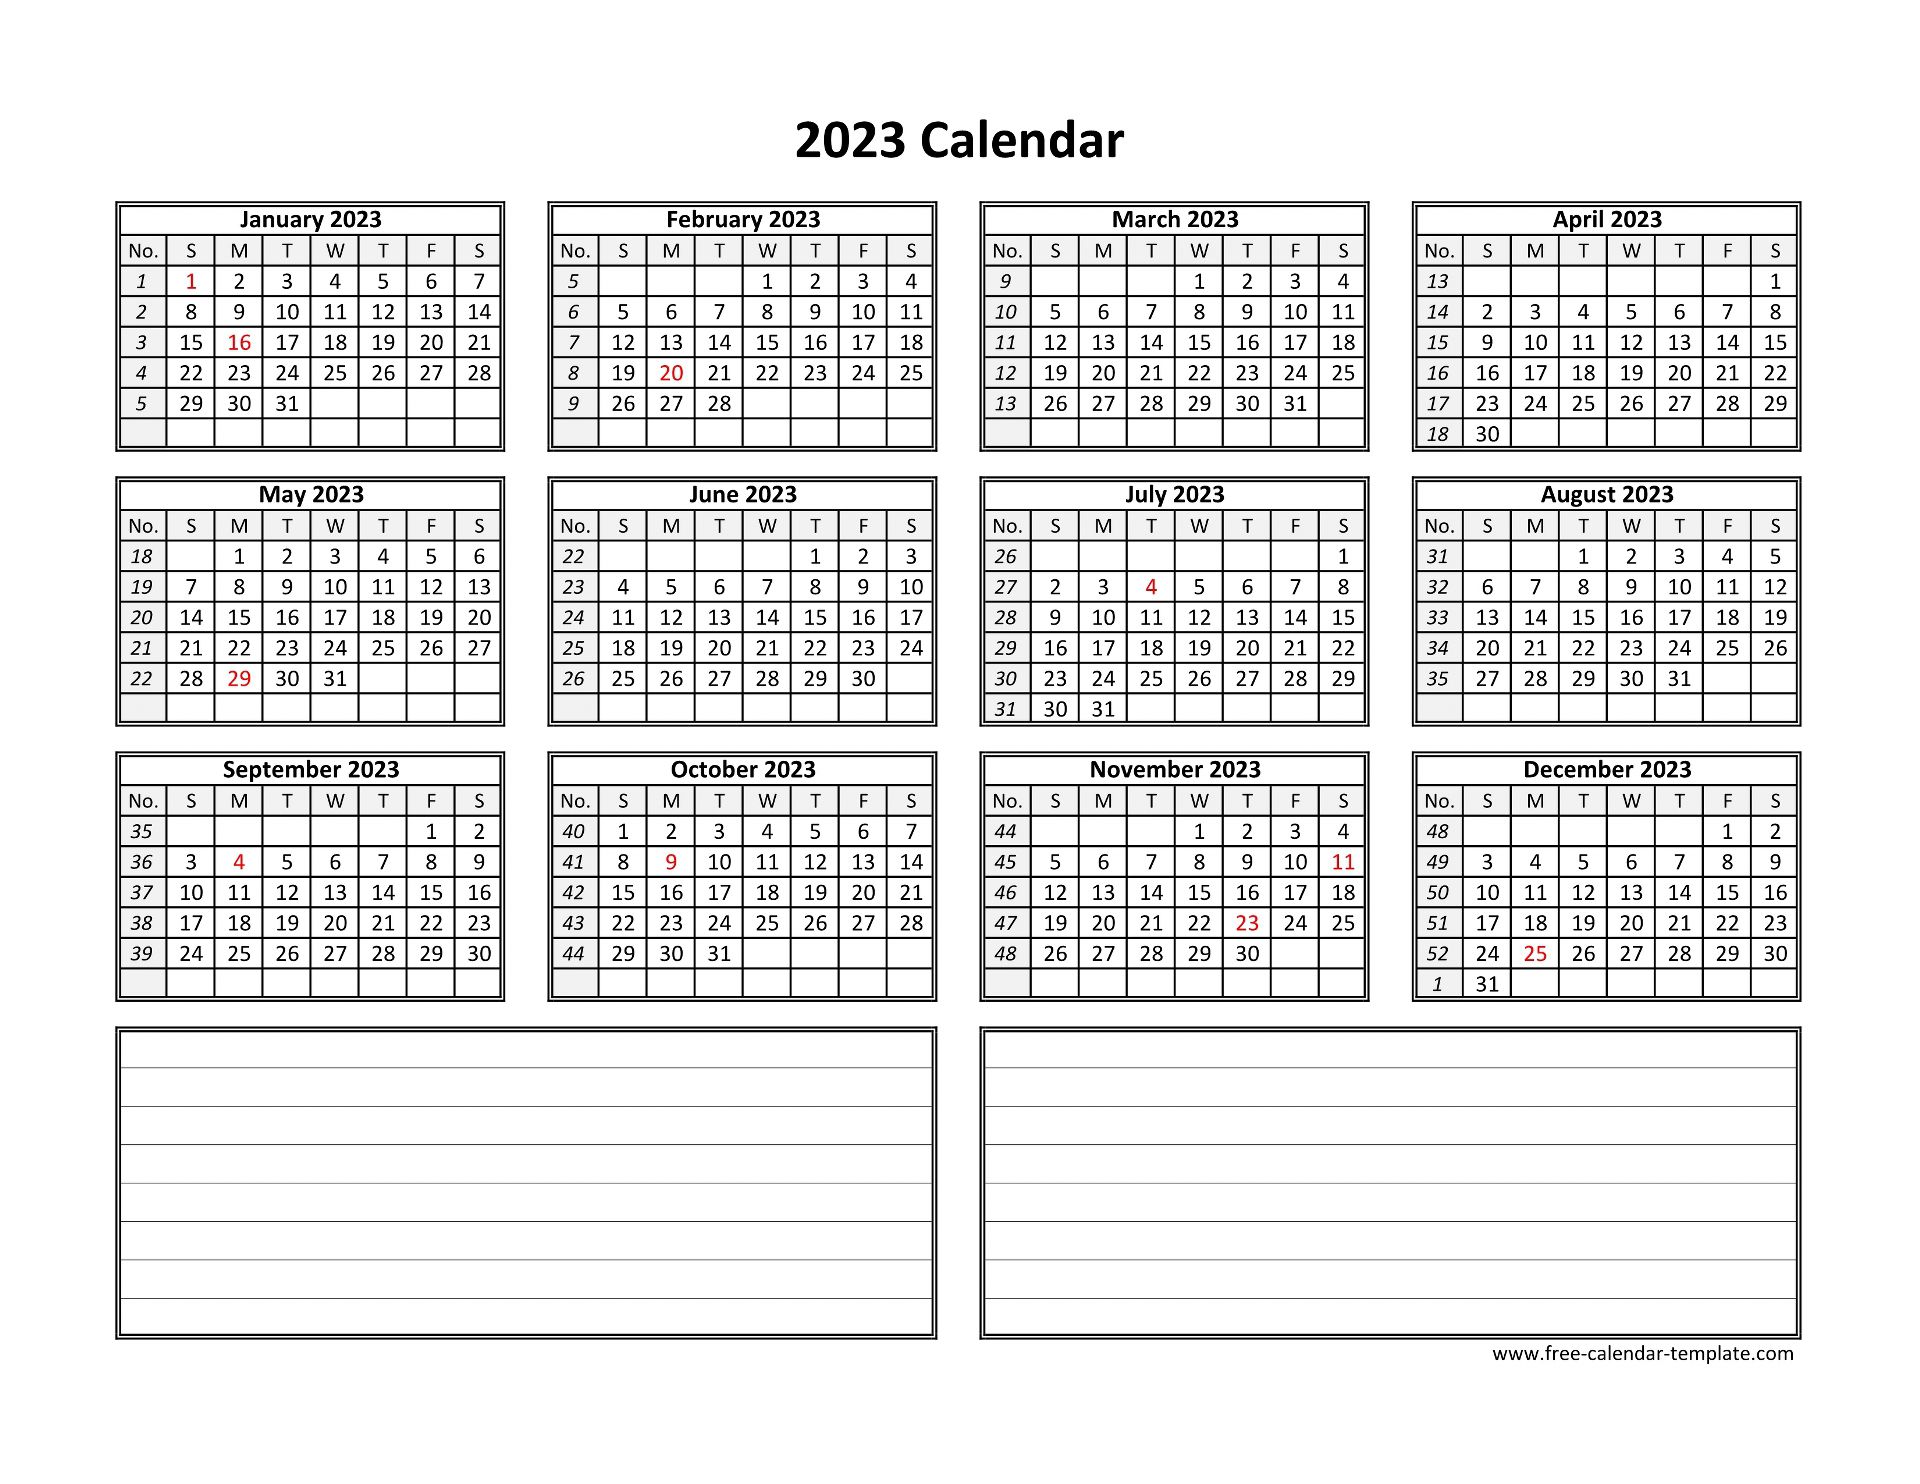 calendar-2023-word-template-time-and-date-calendar-2023-canada